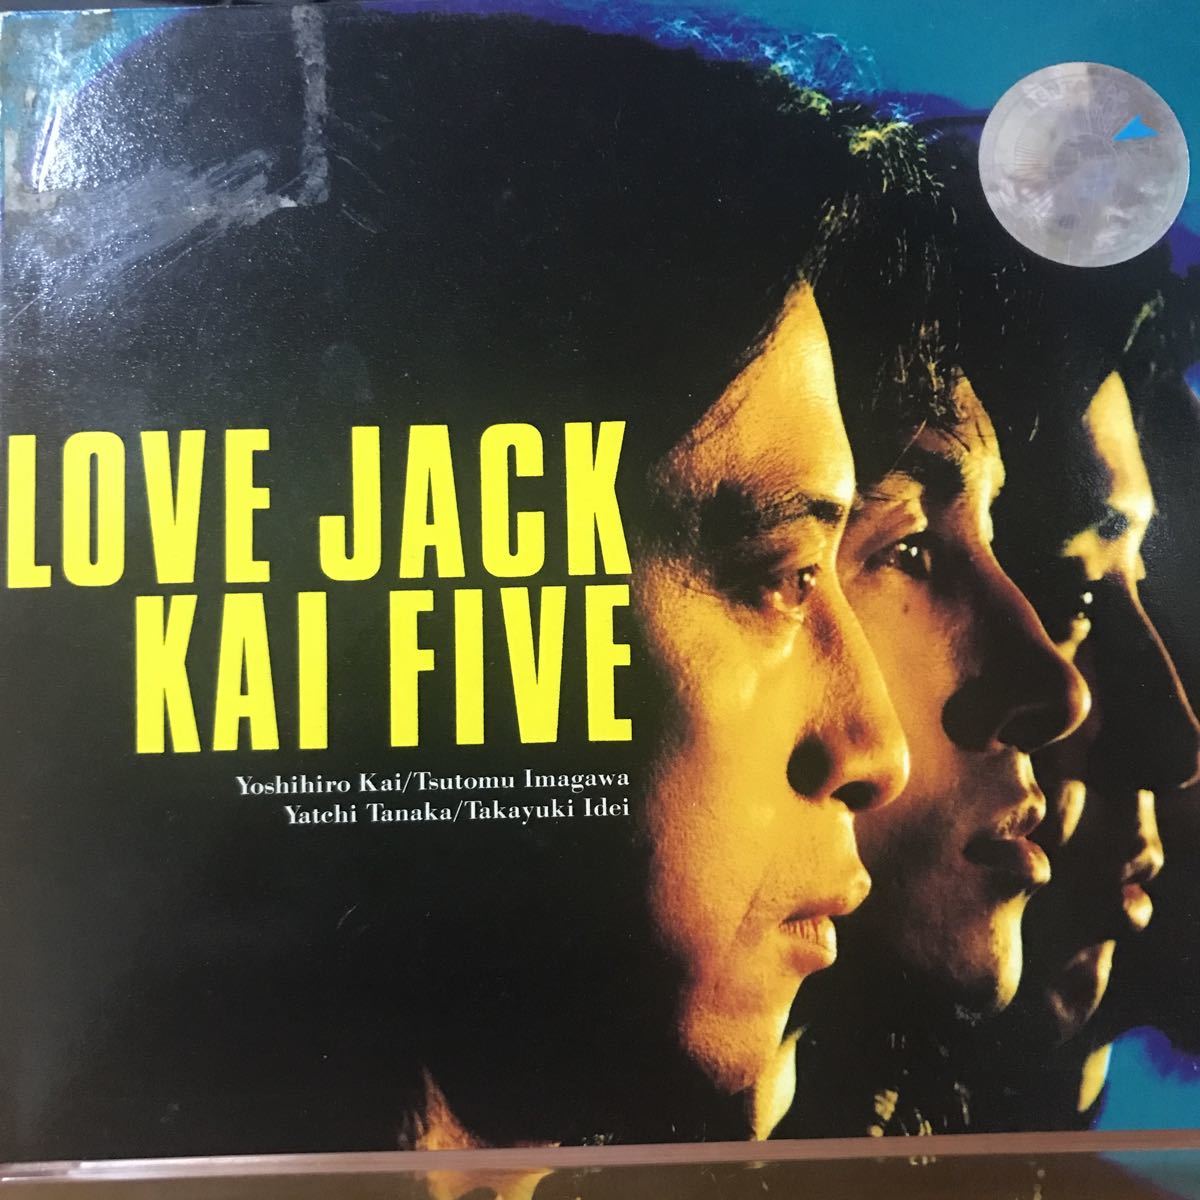 KAI FIVE ★ LOVE JACK ★ 甲斐バンド_画像1